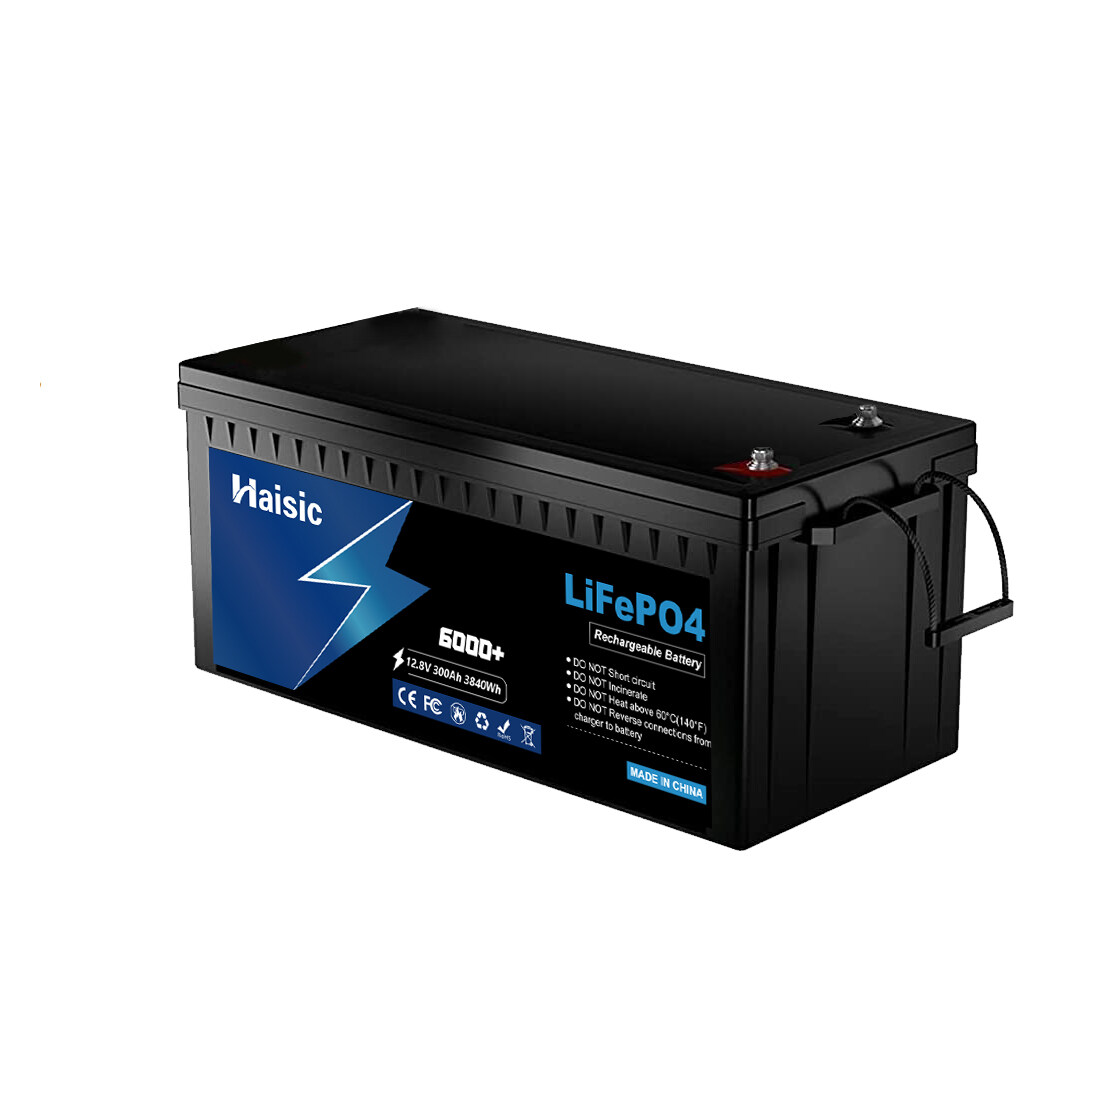 12.8V 3840Wh LifePO4 battery pack for energy storage